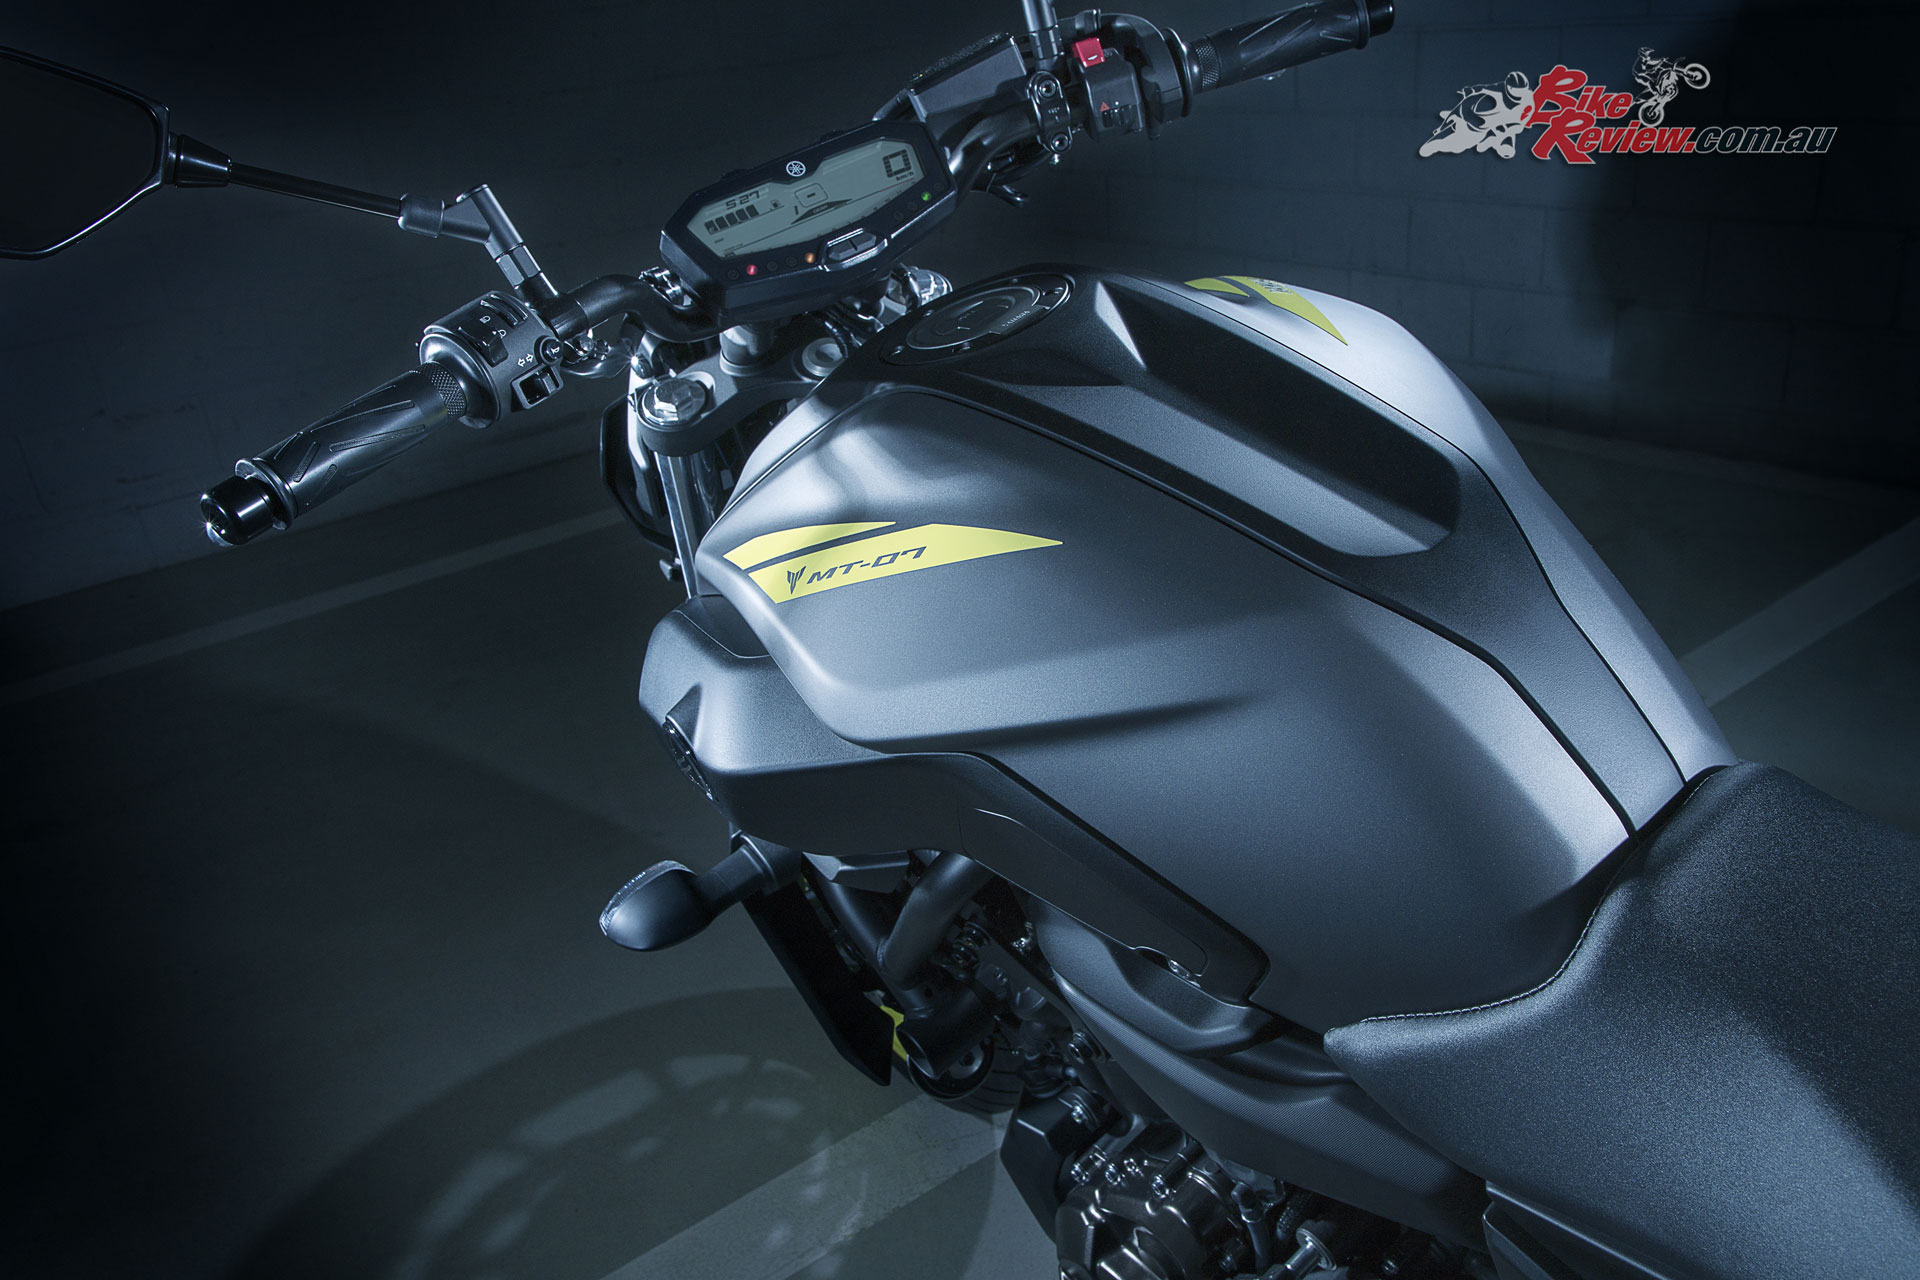 2018-Yamaha-MT-07-Bike-Review-55838.jpg